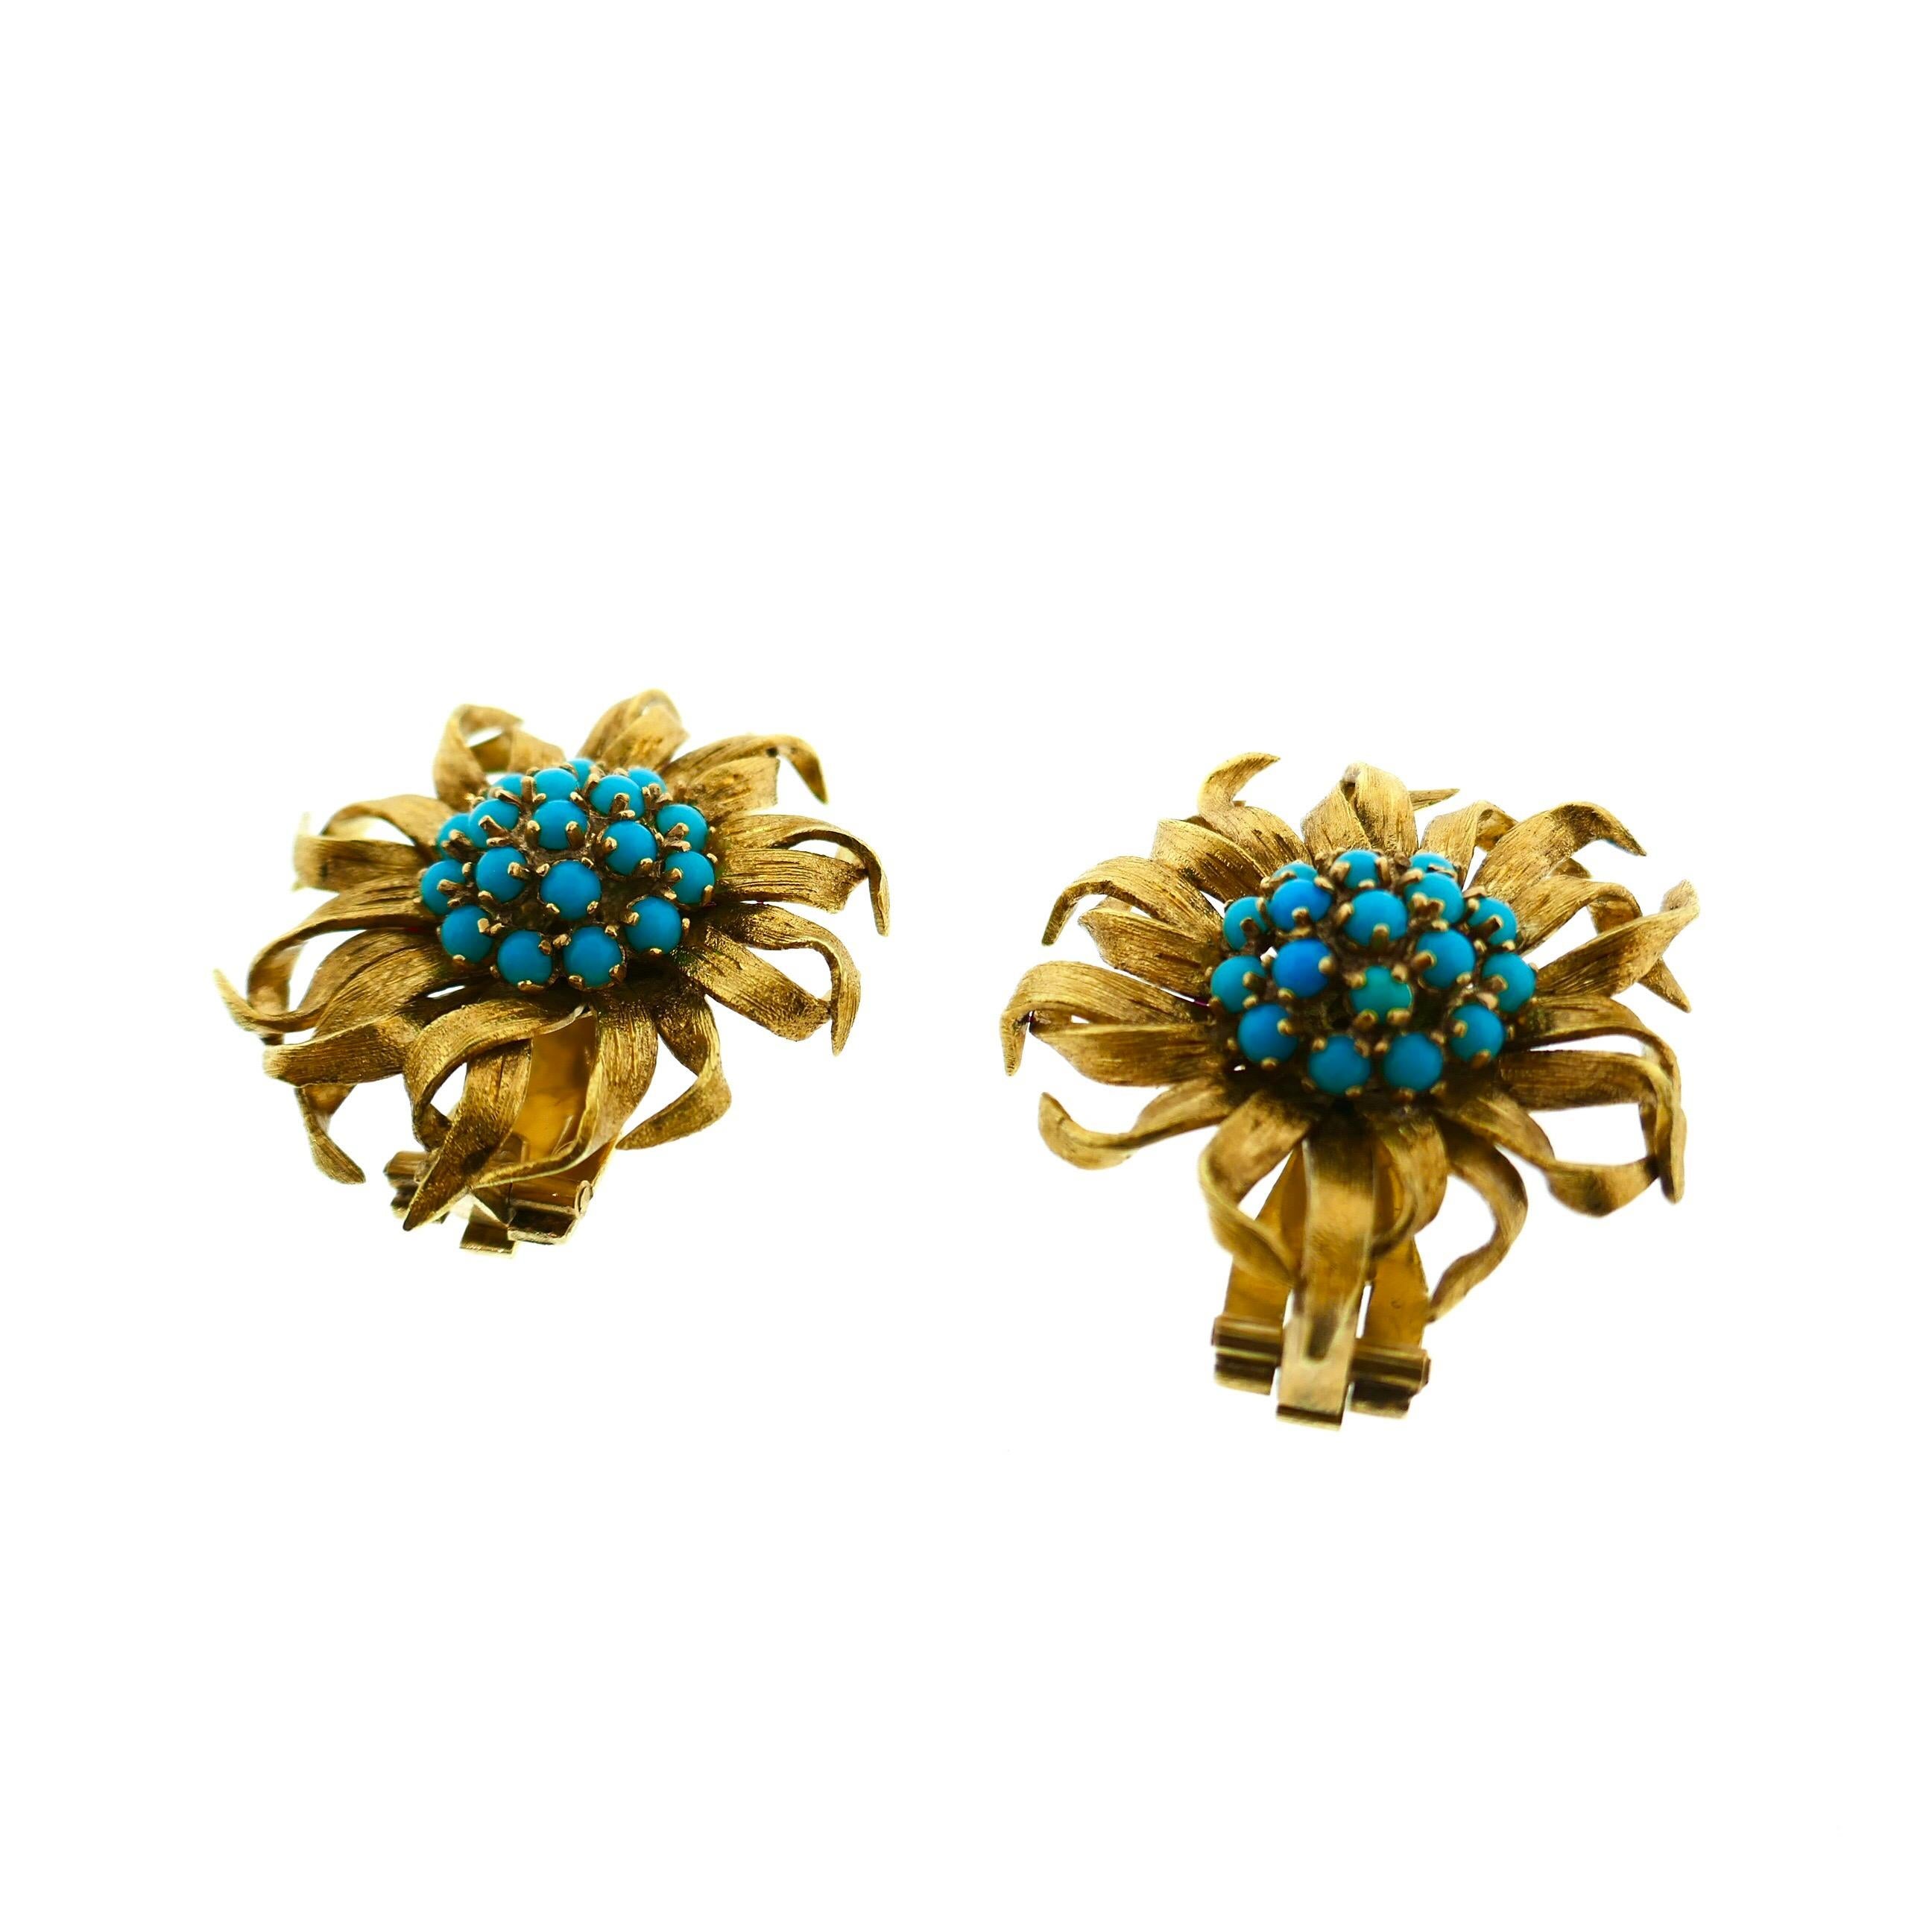 Cartier Paris 18 Karat Yellow Gold Turquoise Flower Brooch and Earrings Set 3